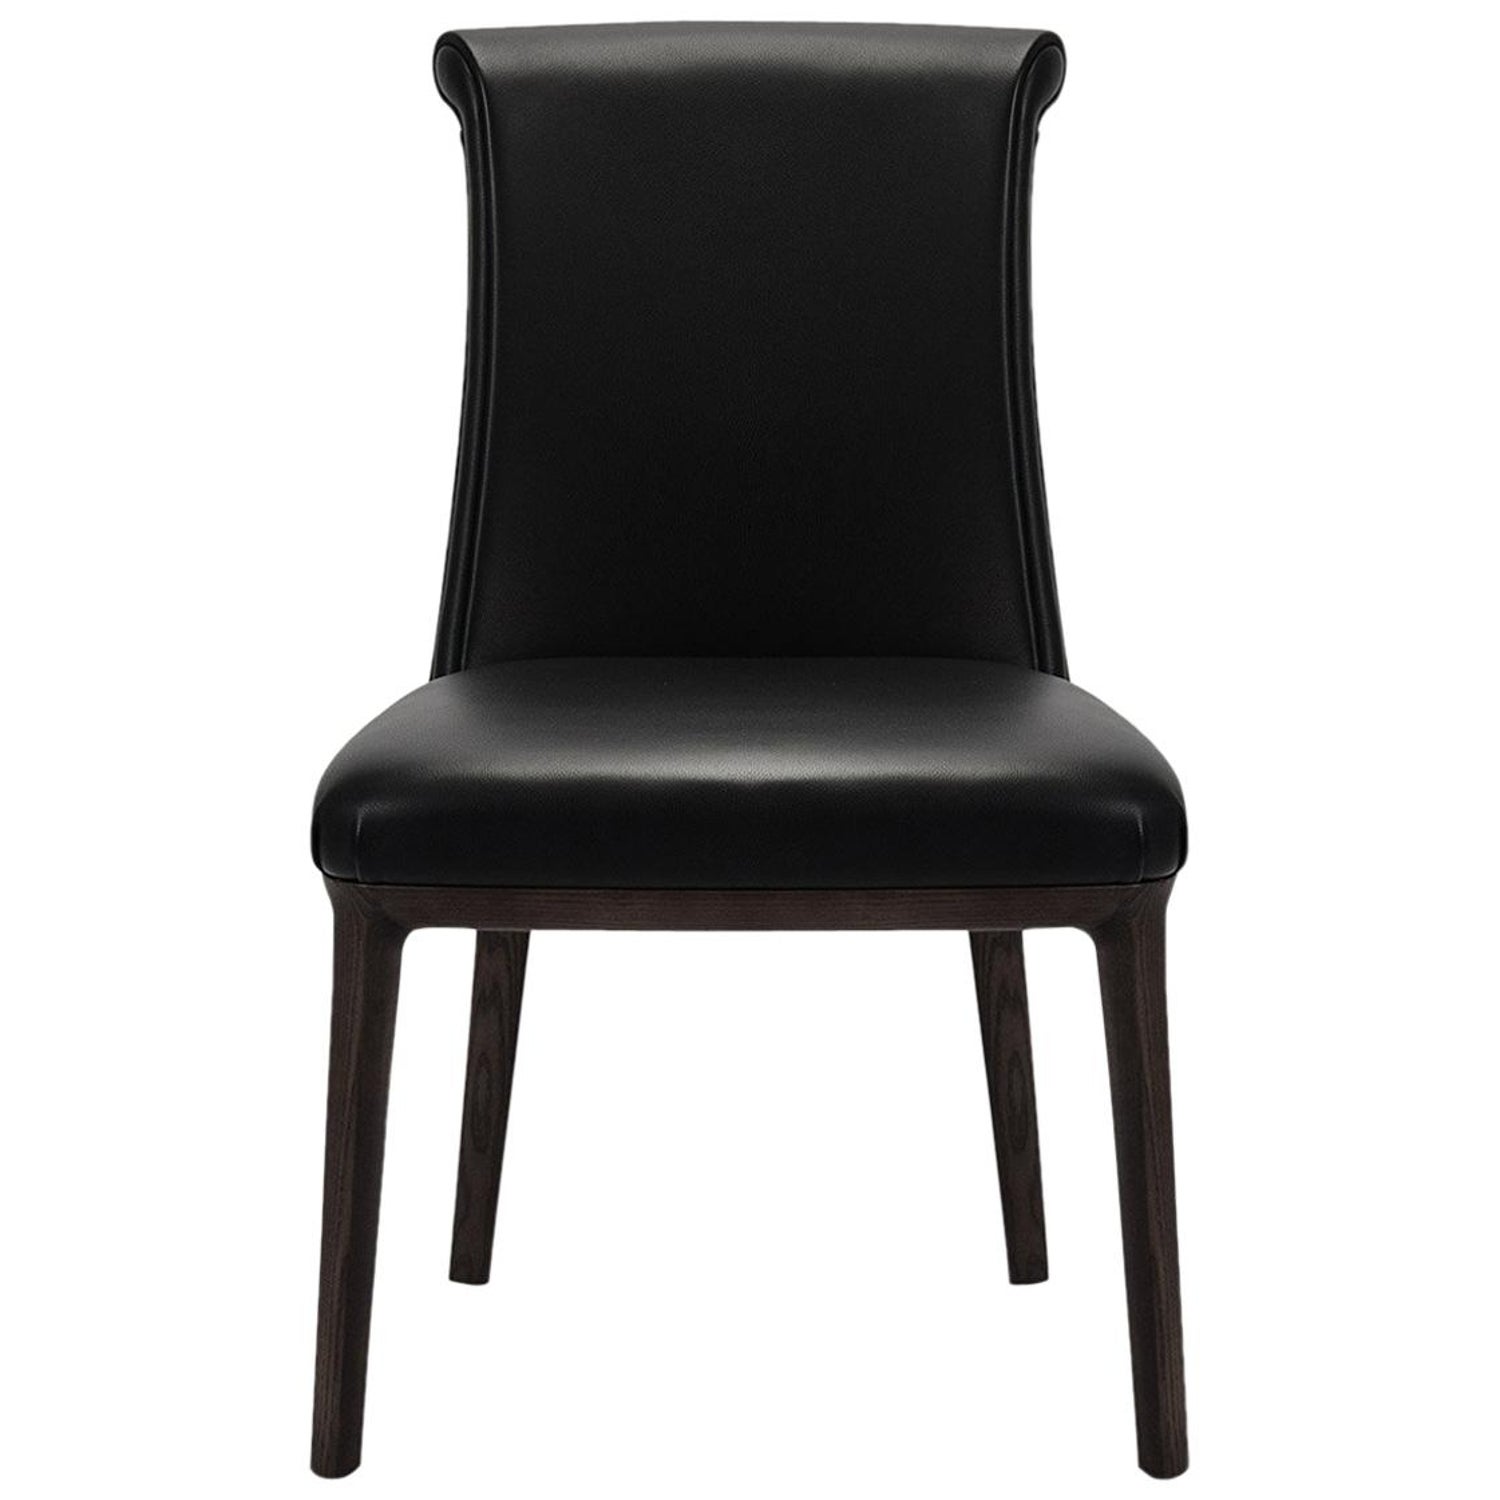 Black Leather Diva Dining Chair, Poltrona Frau For Sale at 1stDibs |  poltrona frau dining chairs, diva dining chairs, poltrona frau diva